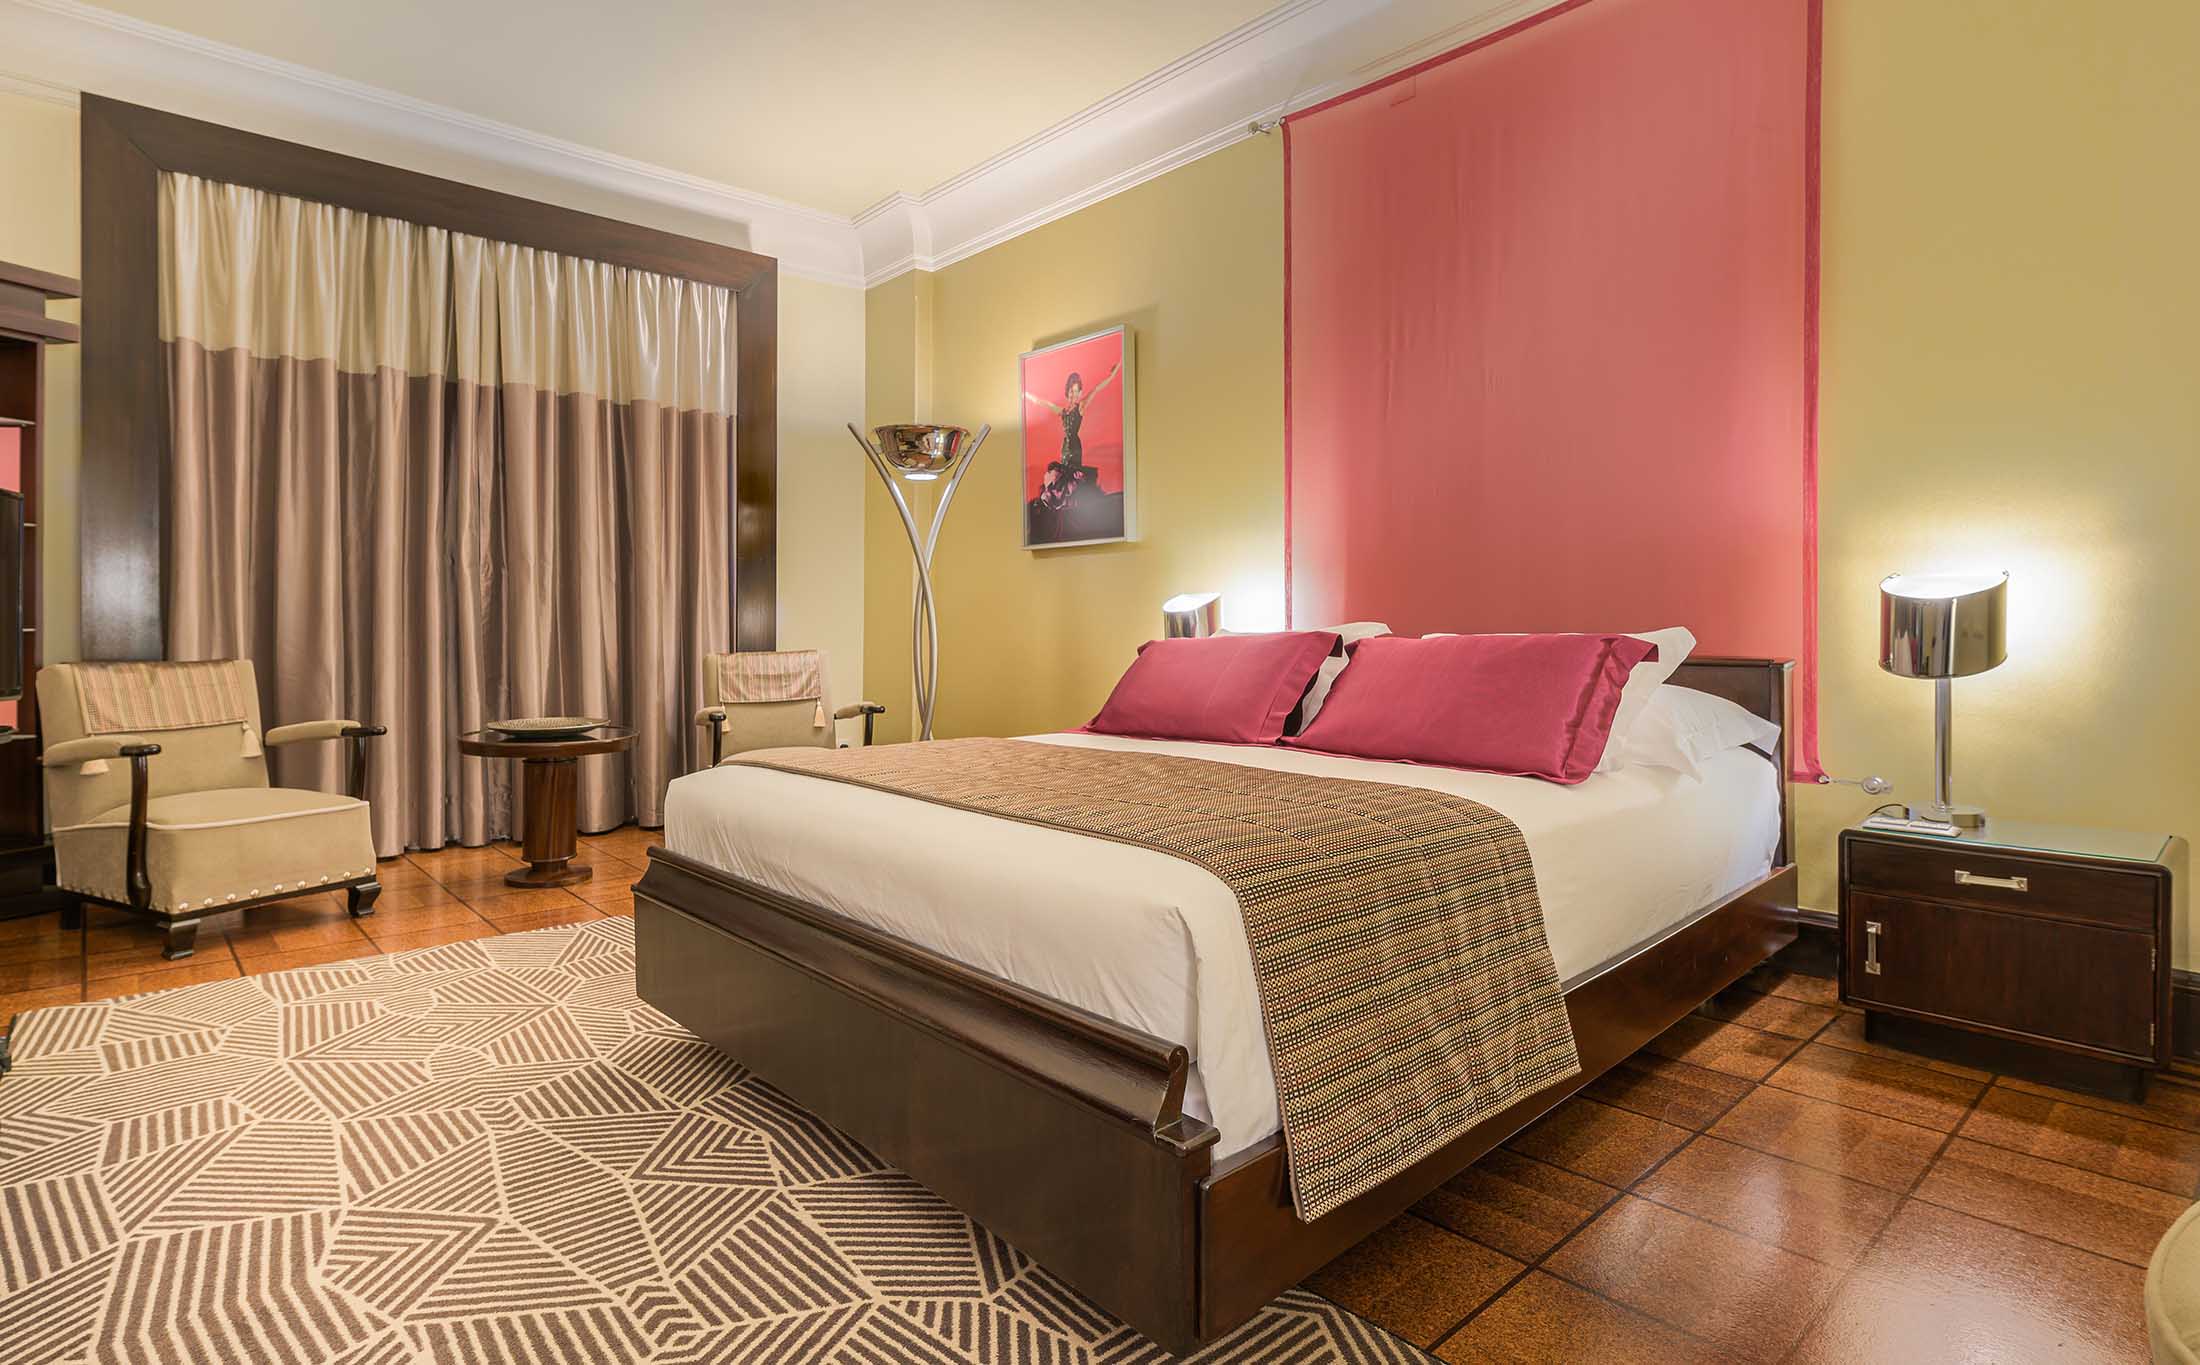 Hotel Britania nomeia quarto 44 “Quarto Carmen Sevilla”